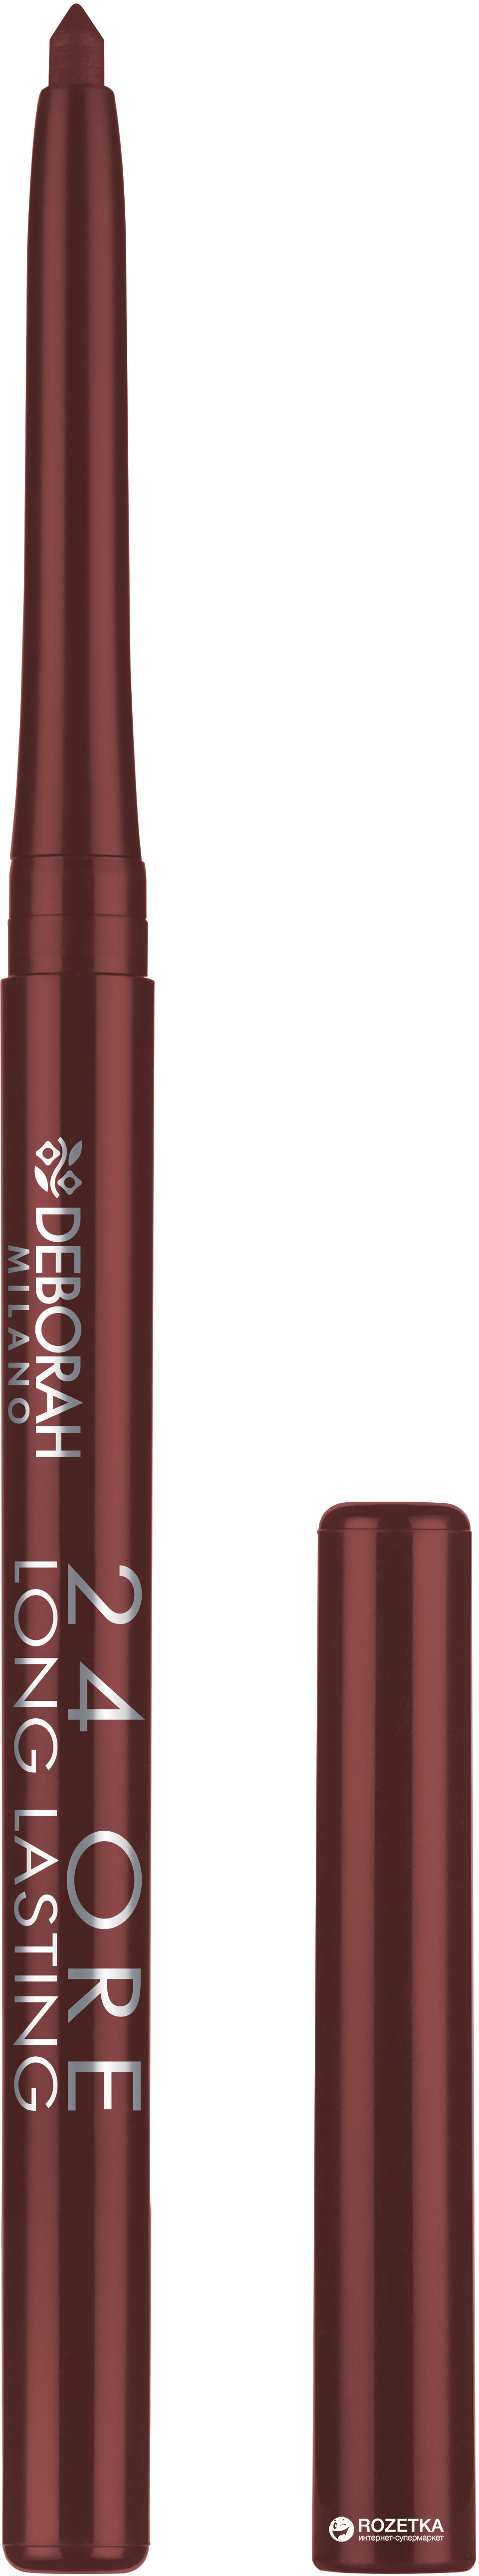 Акция на Косметический карандаш для губ Deborah устойчивый 24Ore пластик № 2 4 г (8009518300505) от Rozetka UA